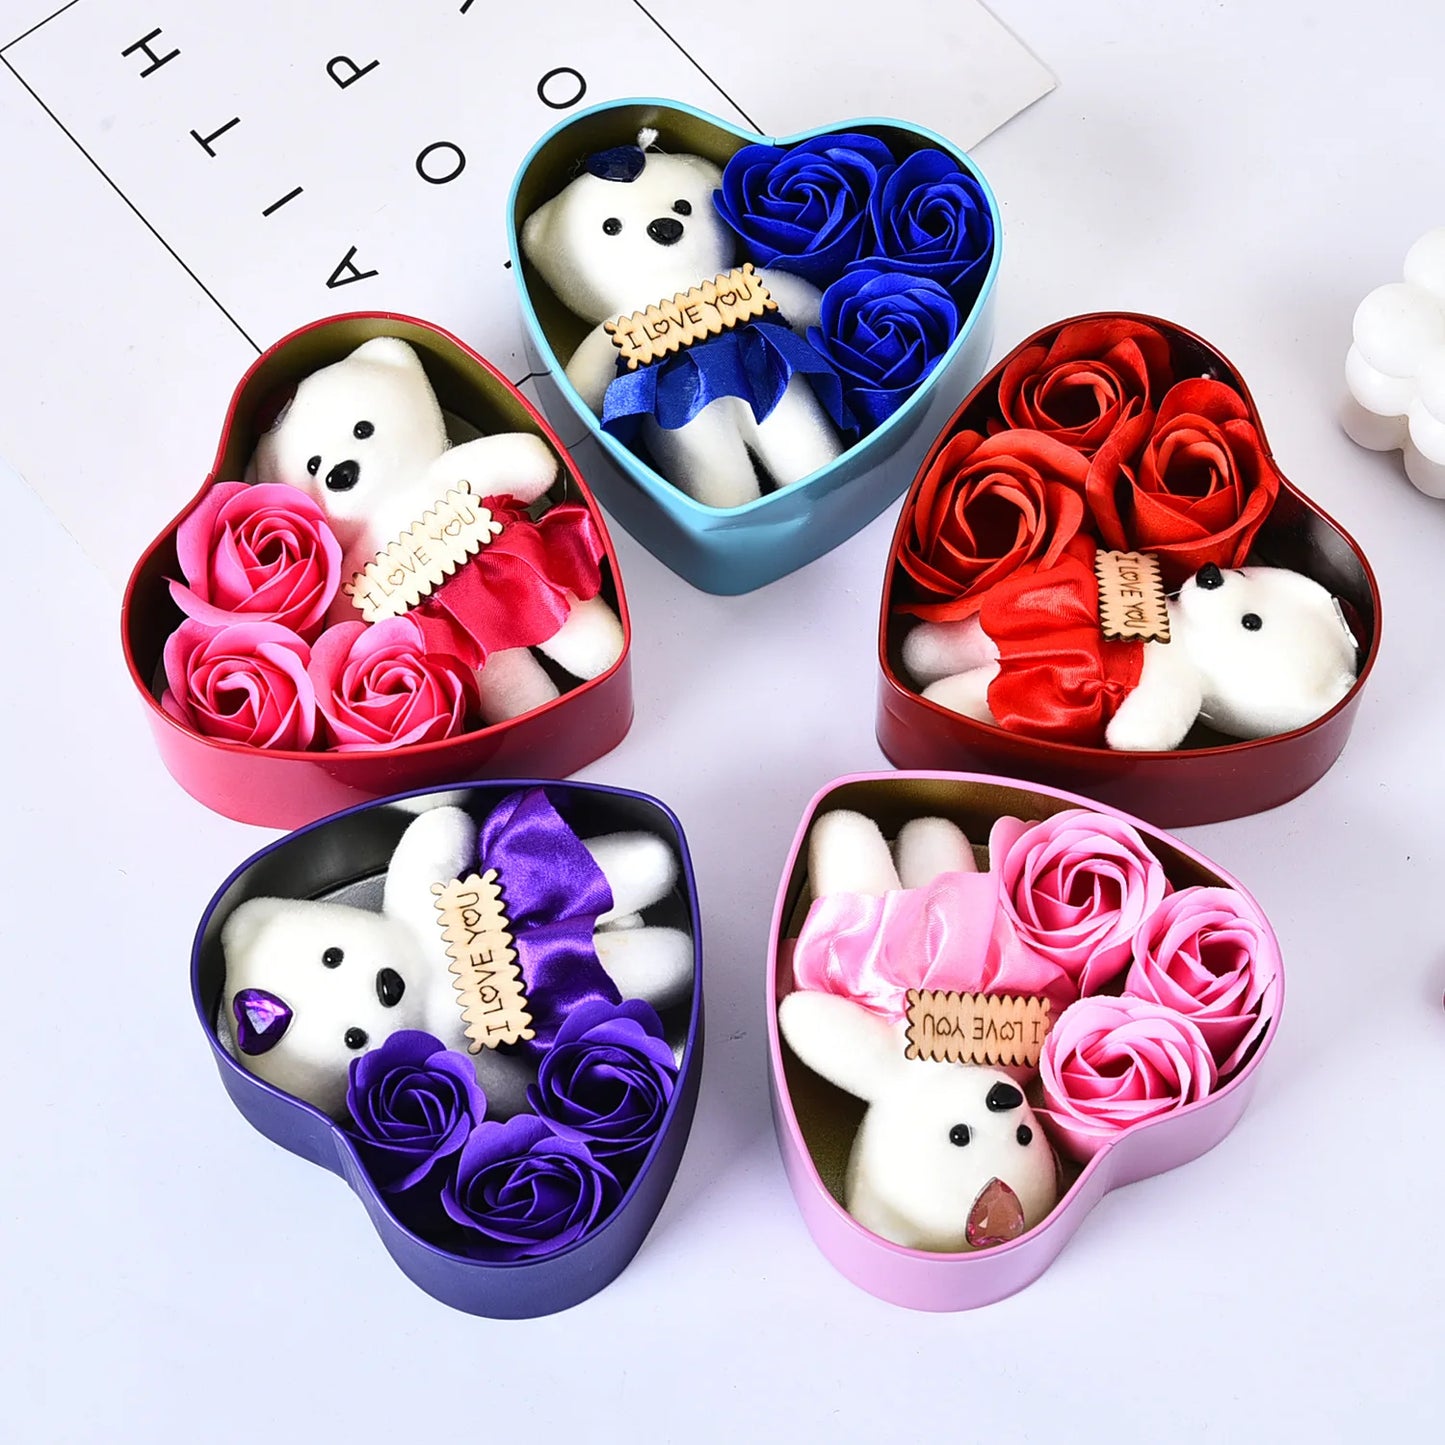 Rose Bear Soap Flower Gift Box - A Timeless Token of Affection